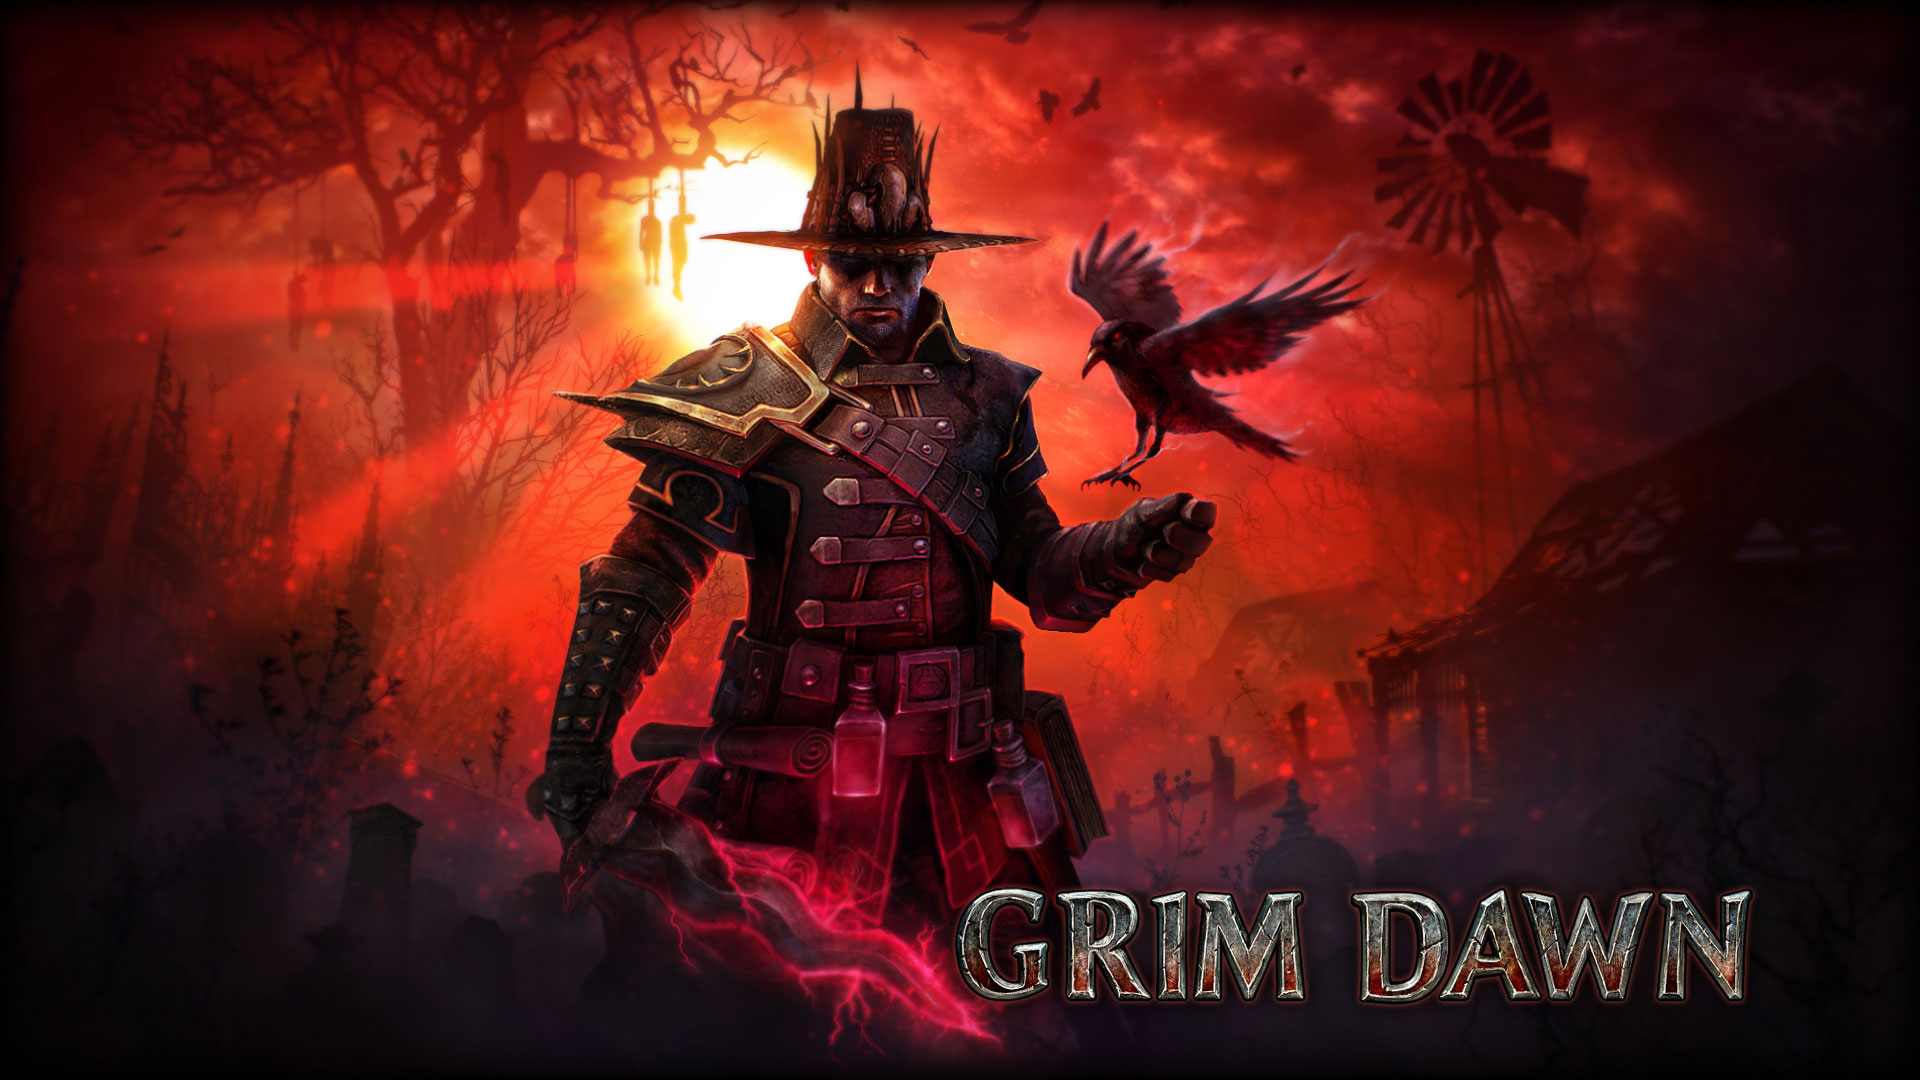 Enter the Apocalyptic Fantasy World of Grim Dawn